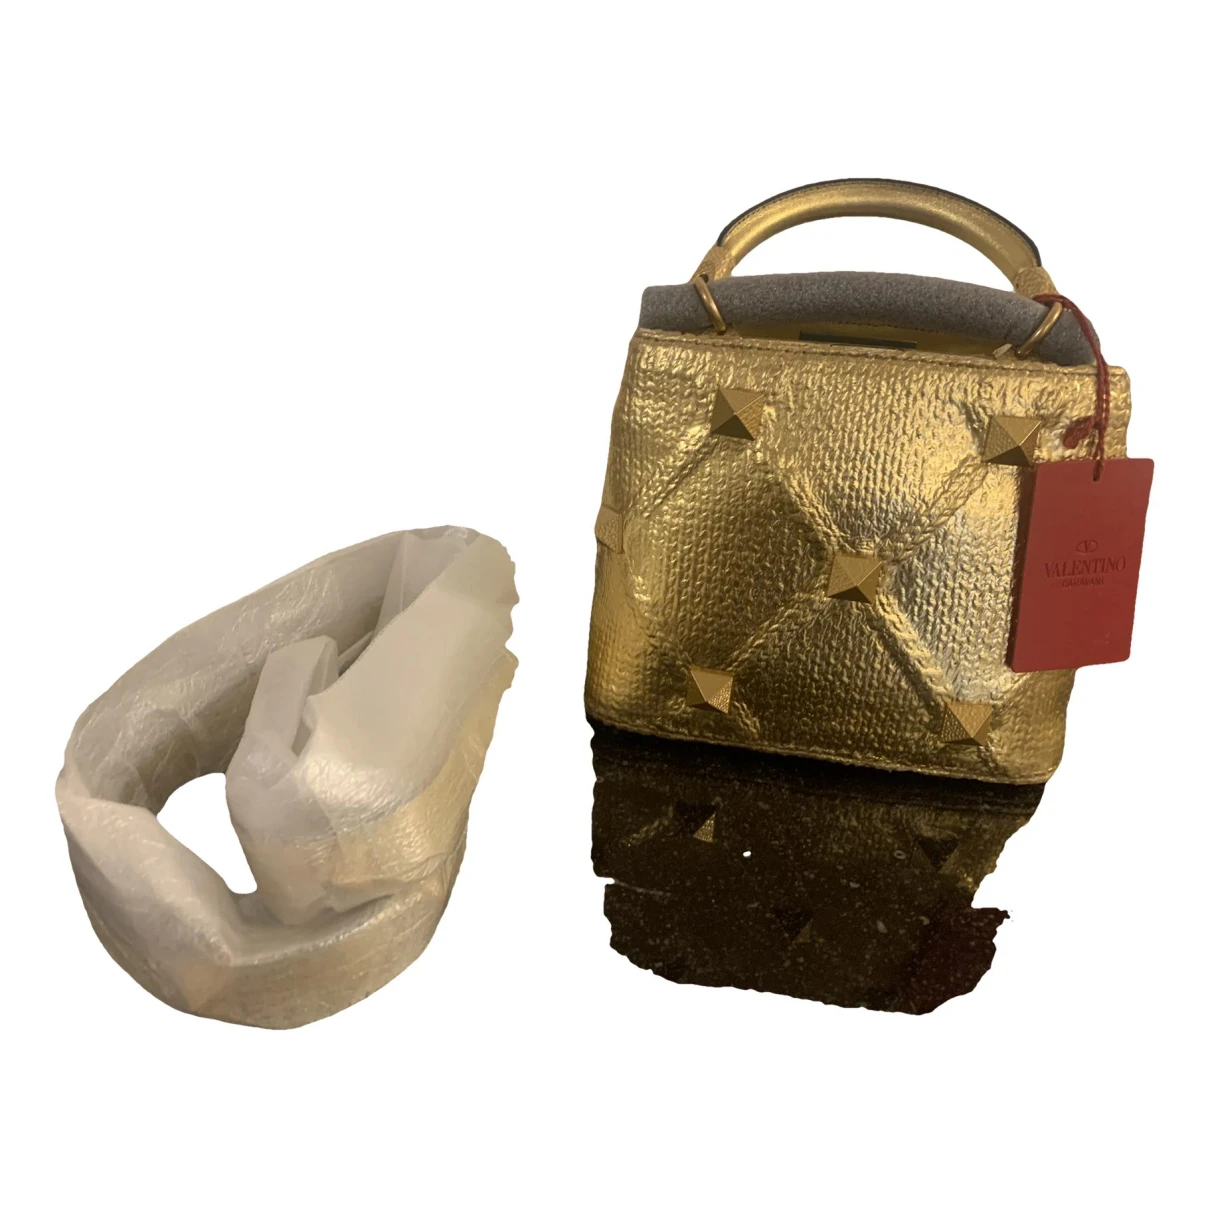 Pre-owned Valentino Garavani Roman Stud Leather Handbag In Gold